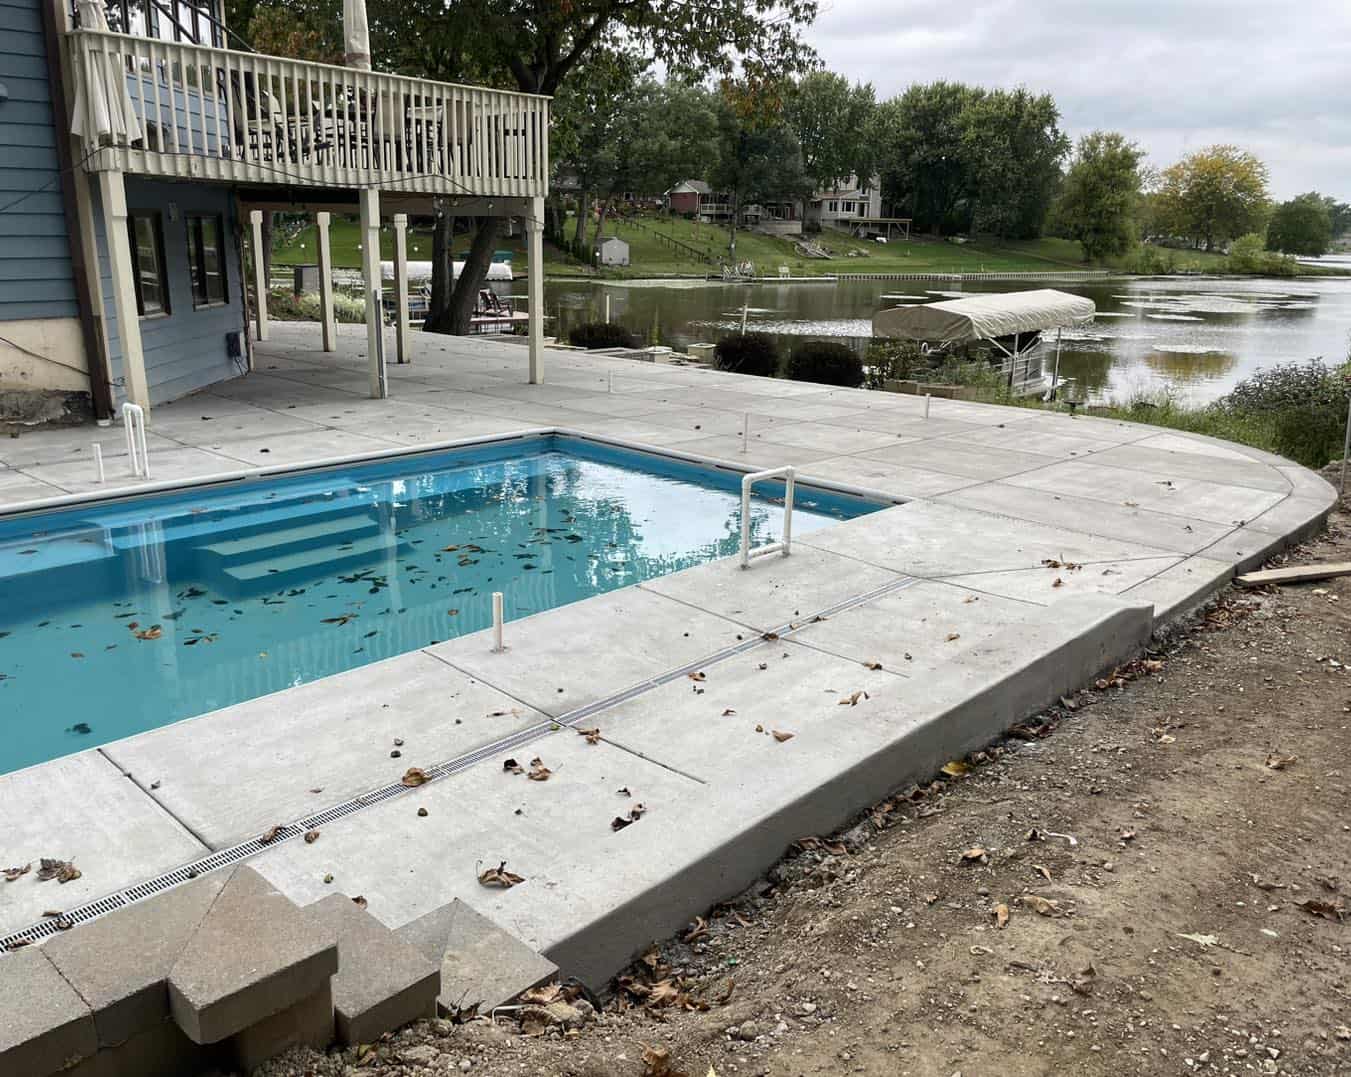 A concrete pool with a deck next to a lake.